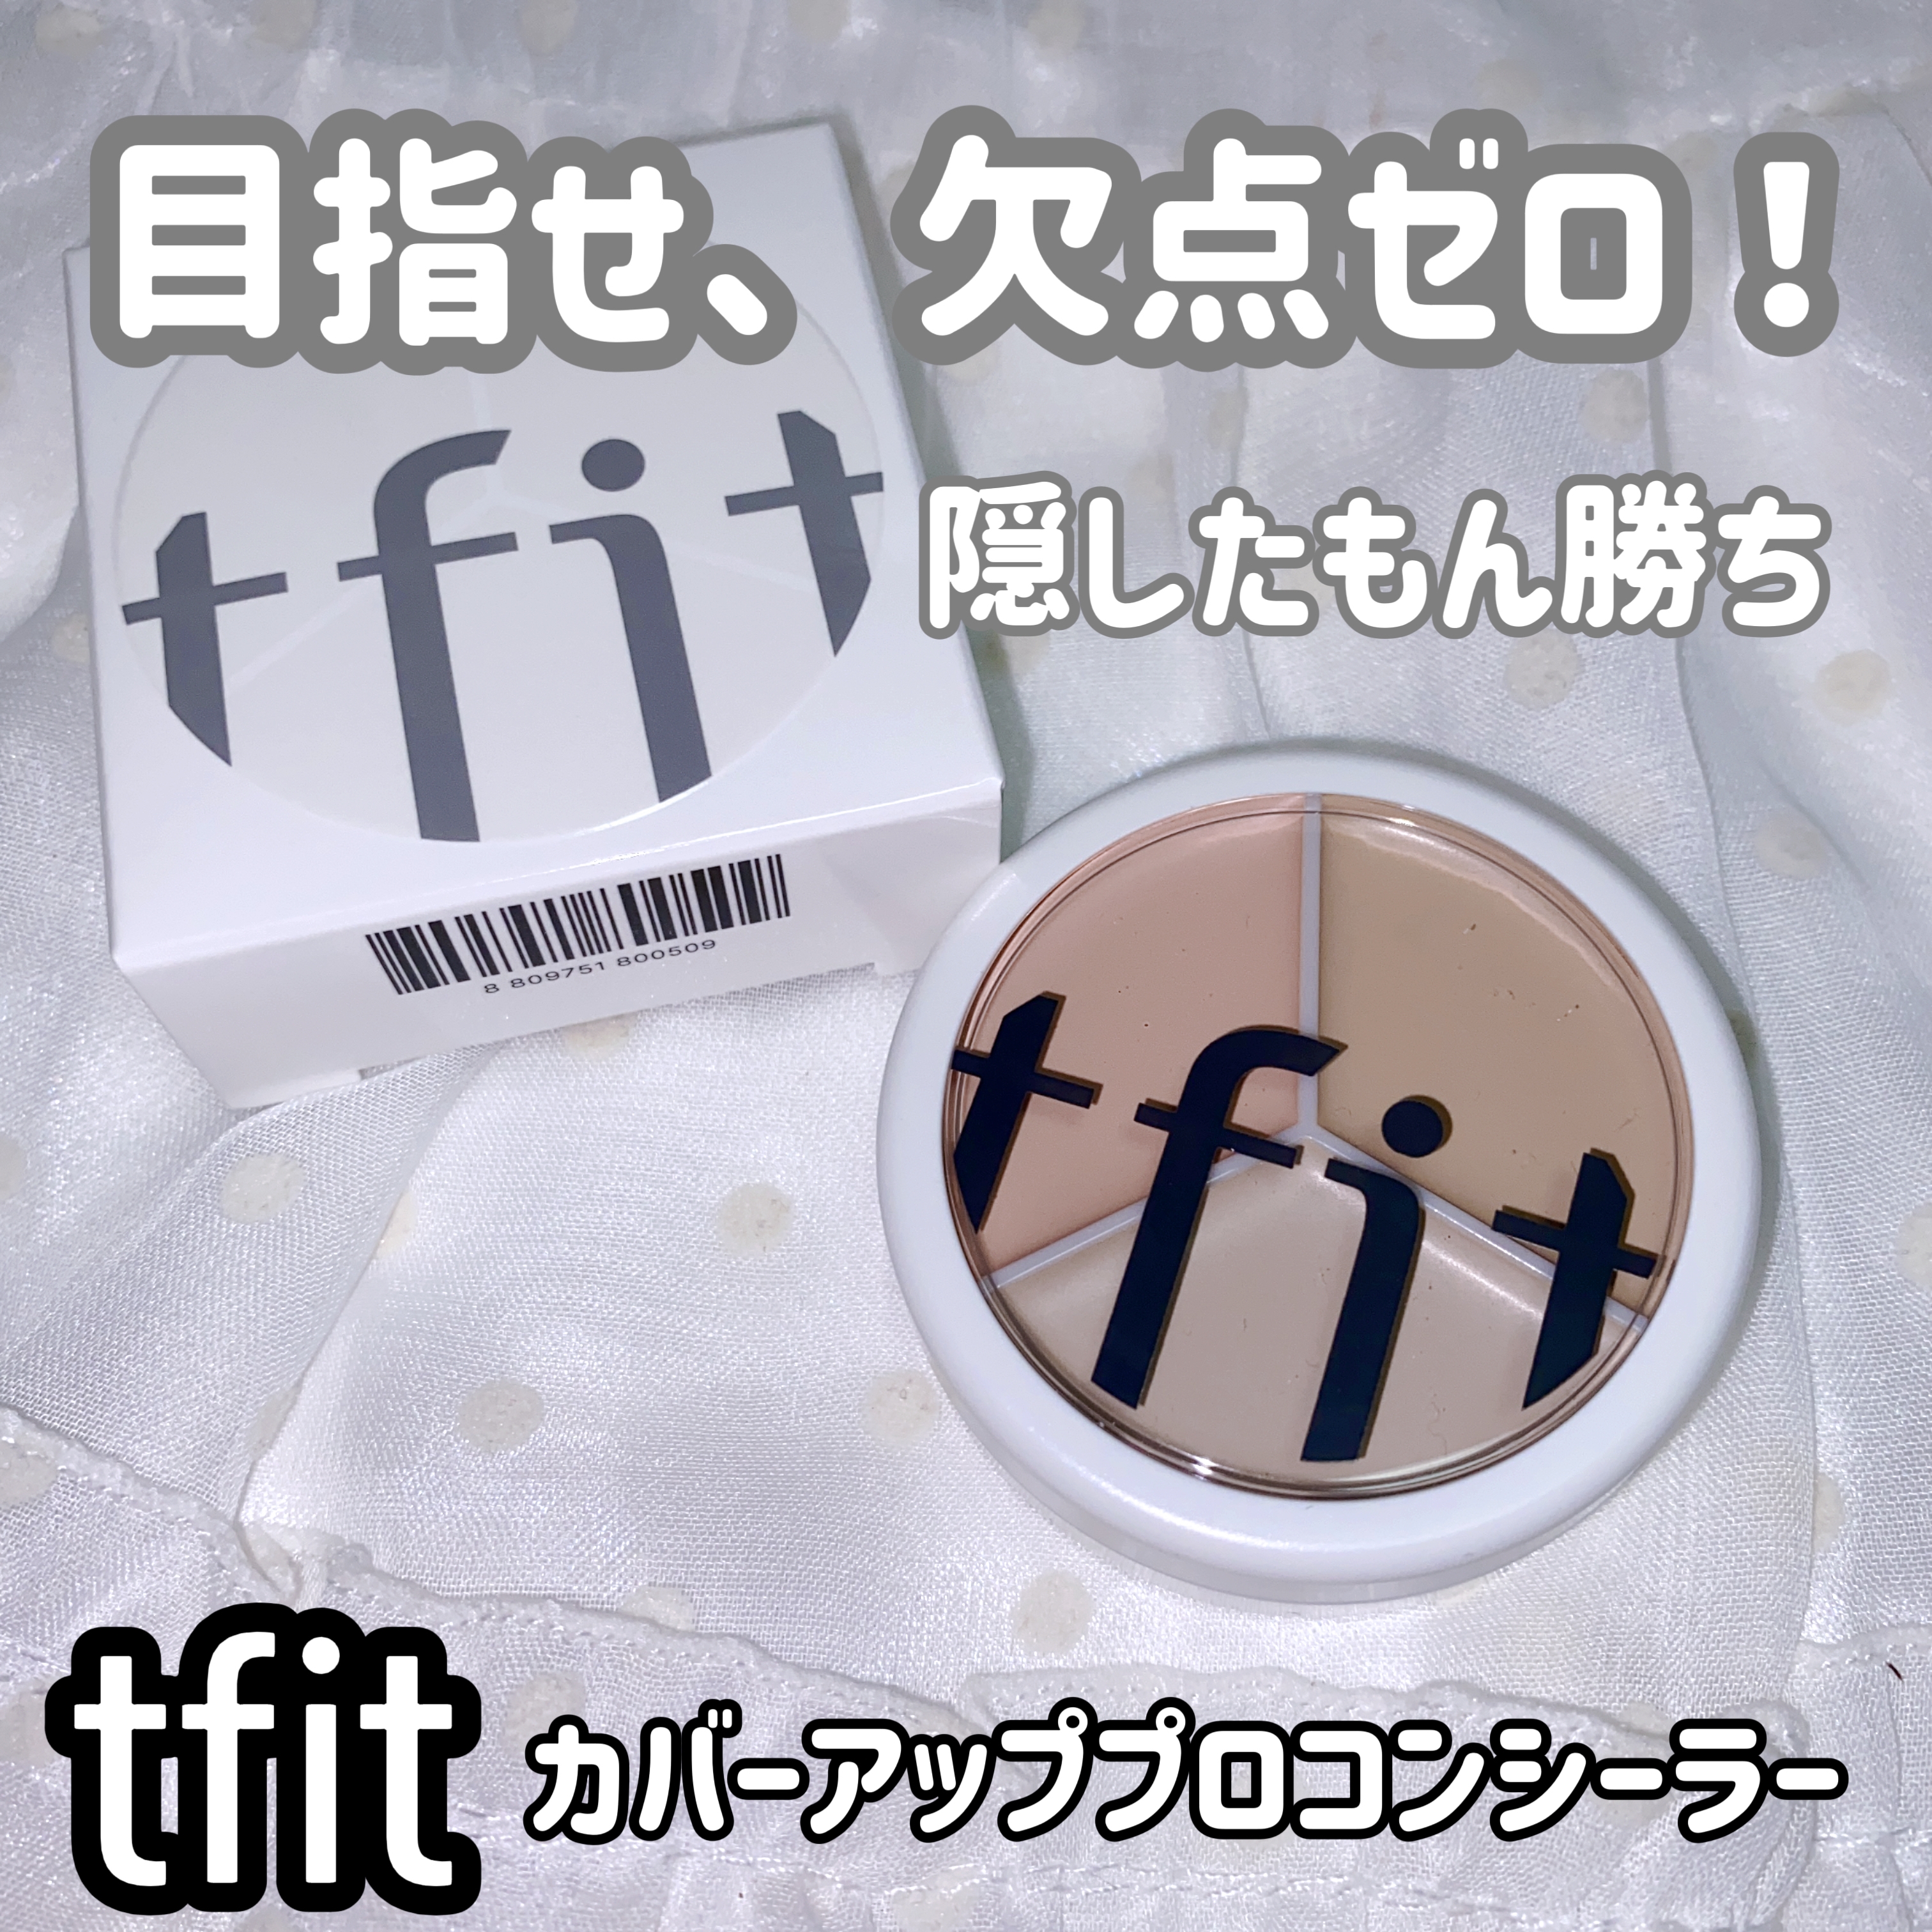 tfit(ティーフィット) カバーアッププロコンシーラーの良い点・メリットに関する珈琲豆♡さんの口コミ画像1